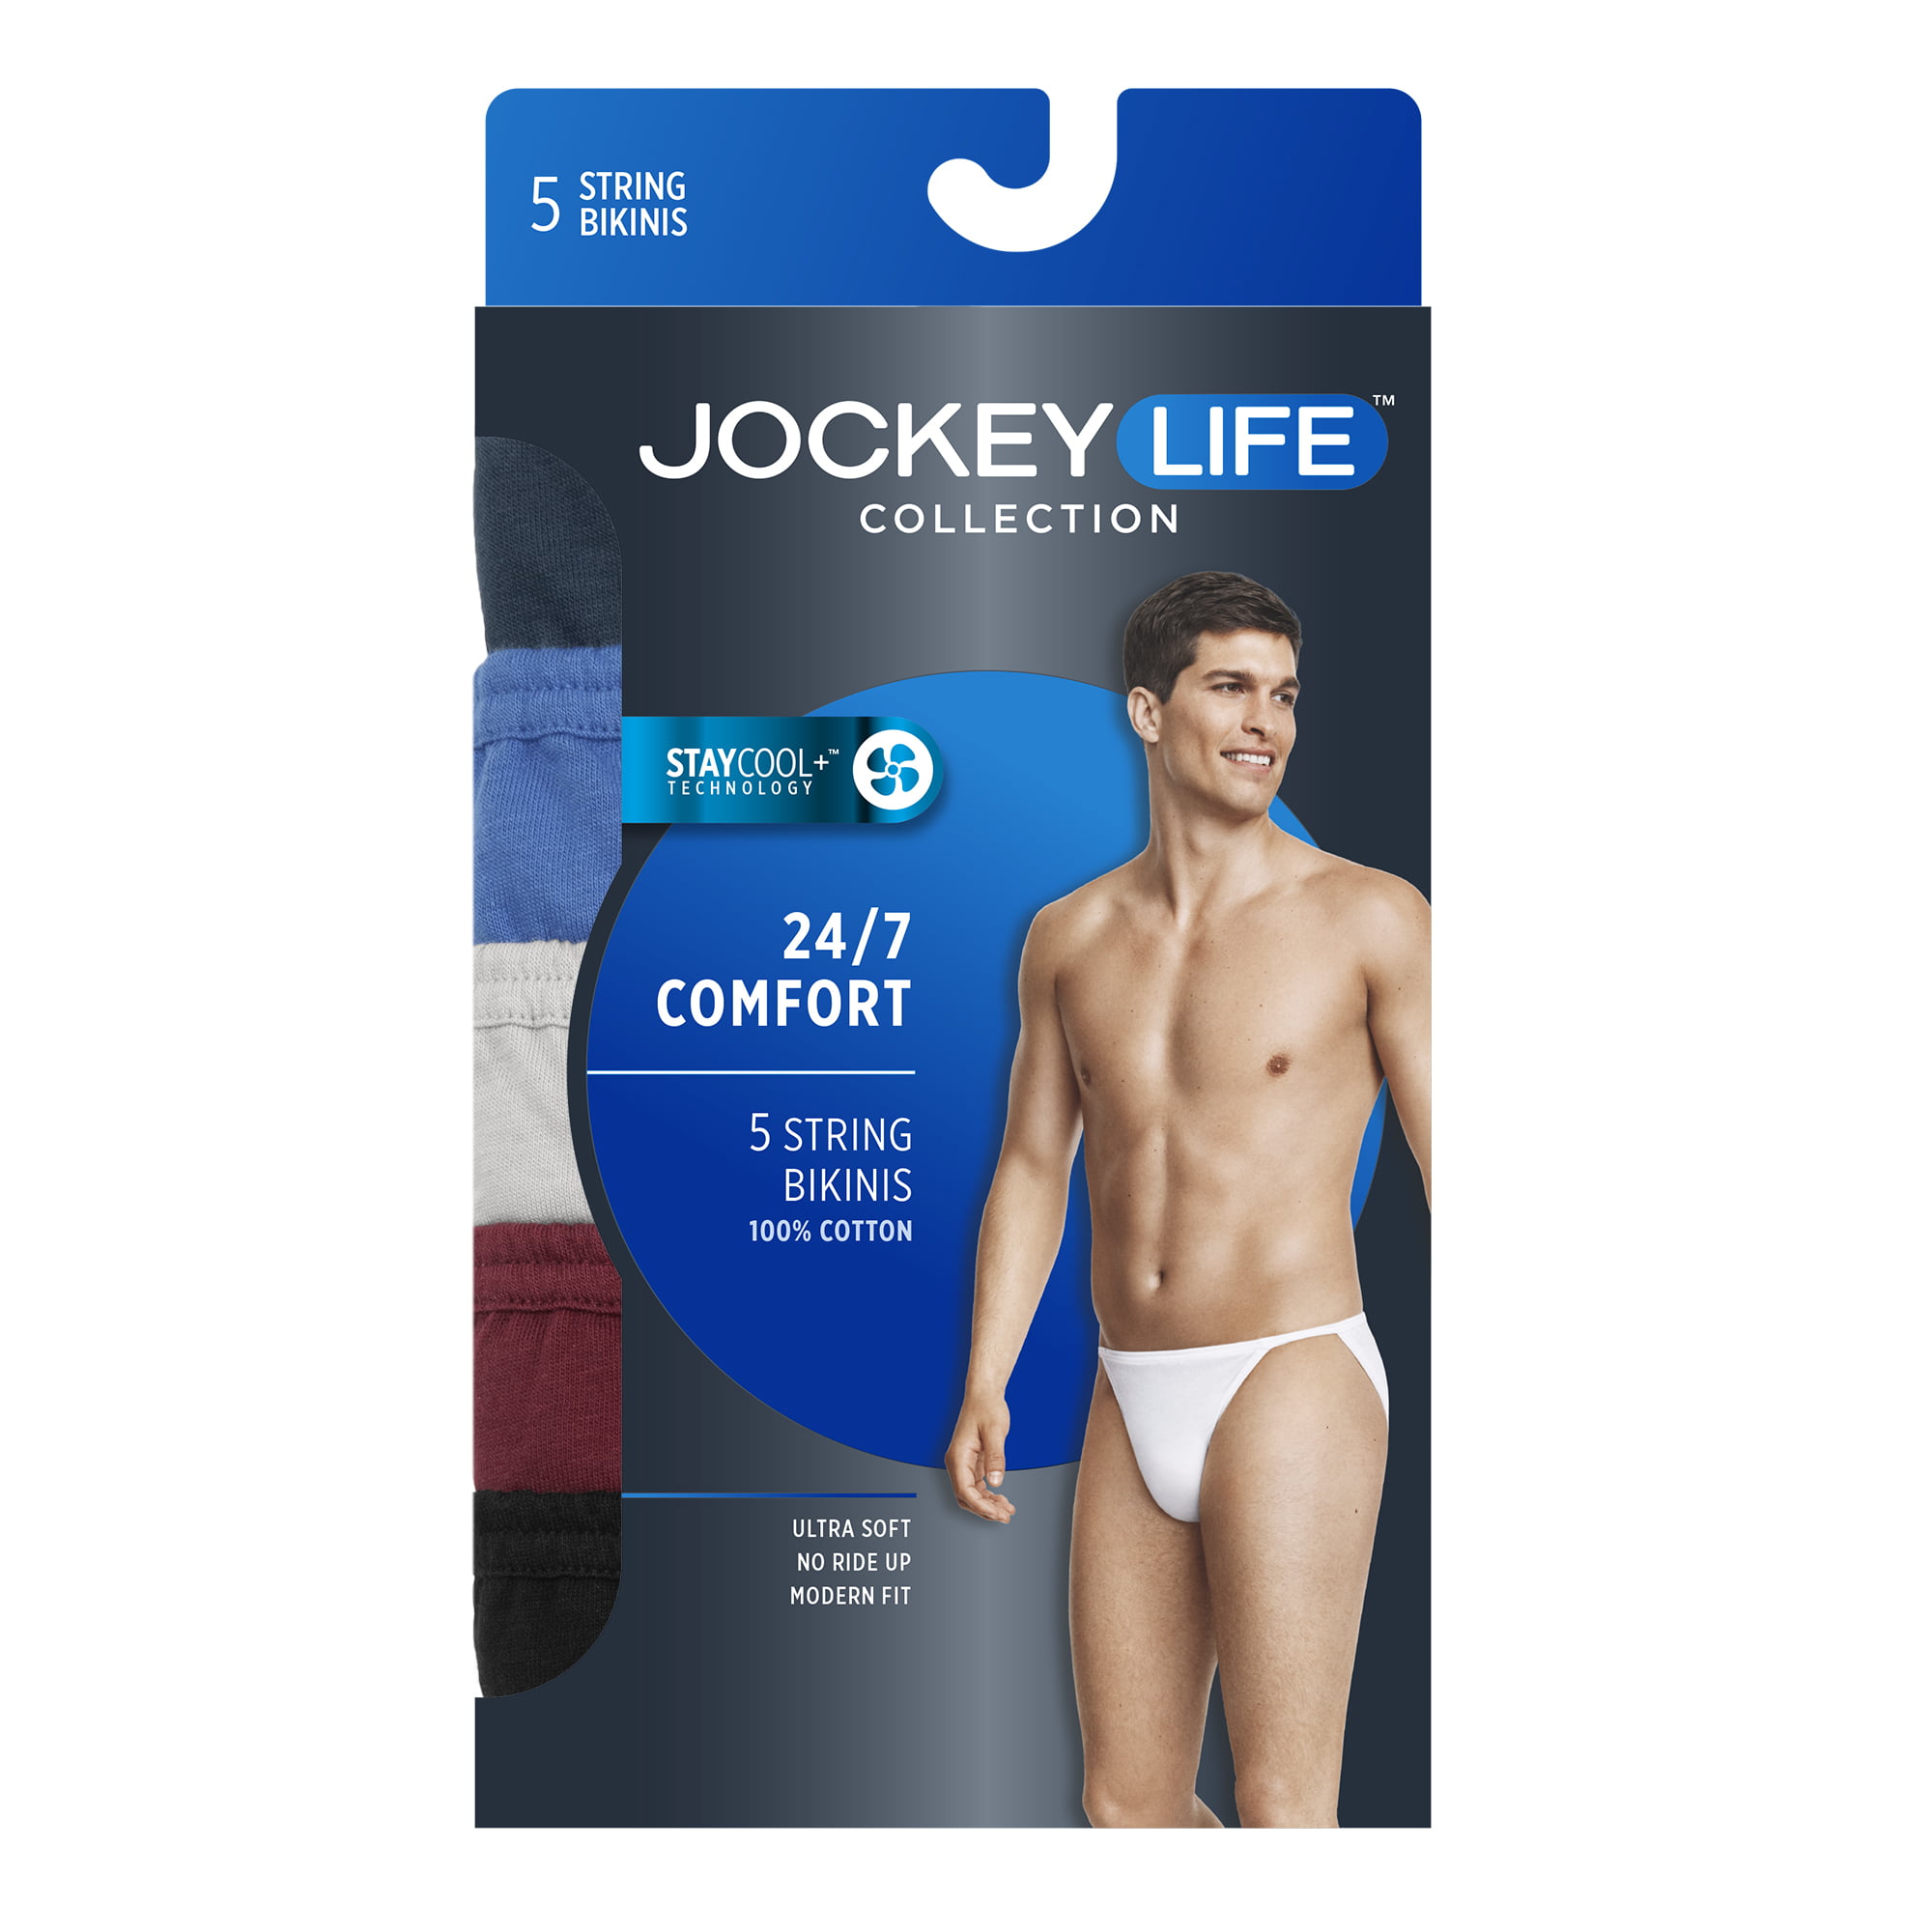 3 packs Jockey Life Collection 80% off.